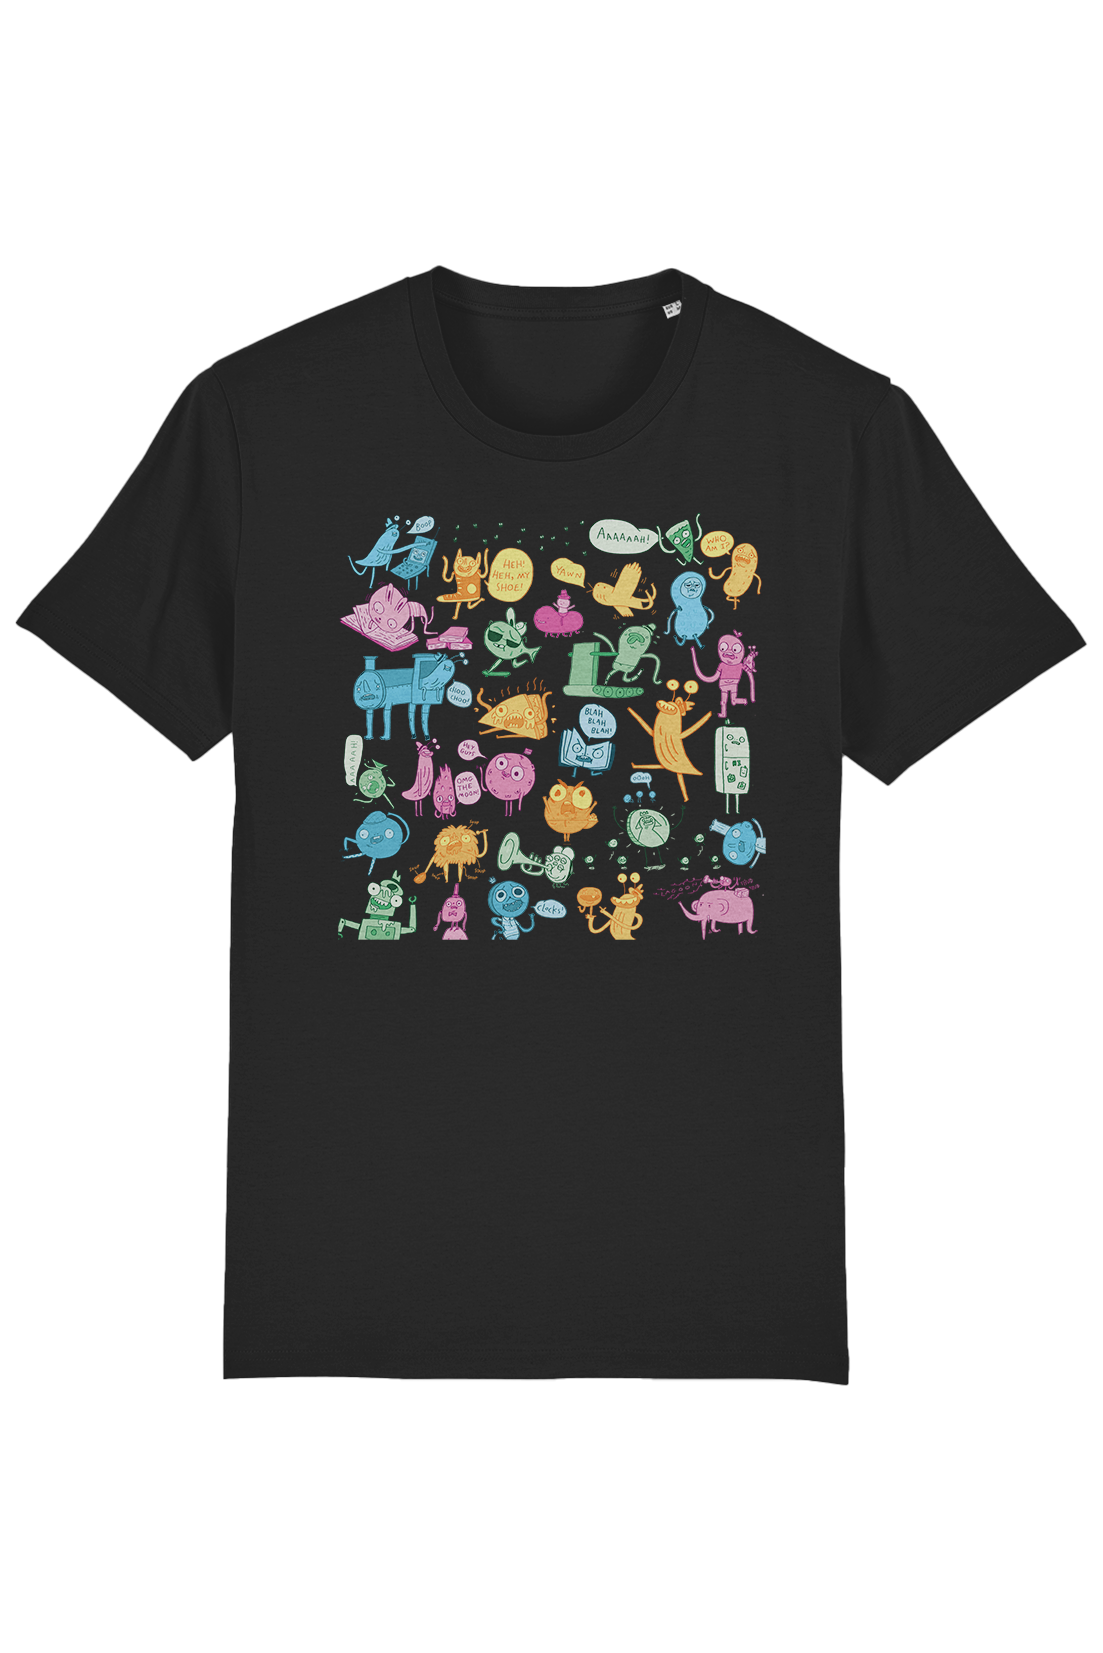 Doug Slugman P.I. Character Mix-up Mono adult t-shirt